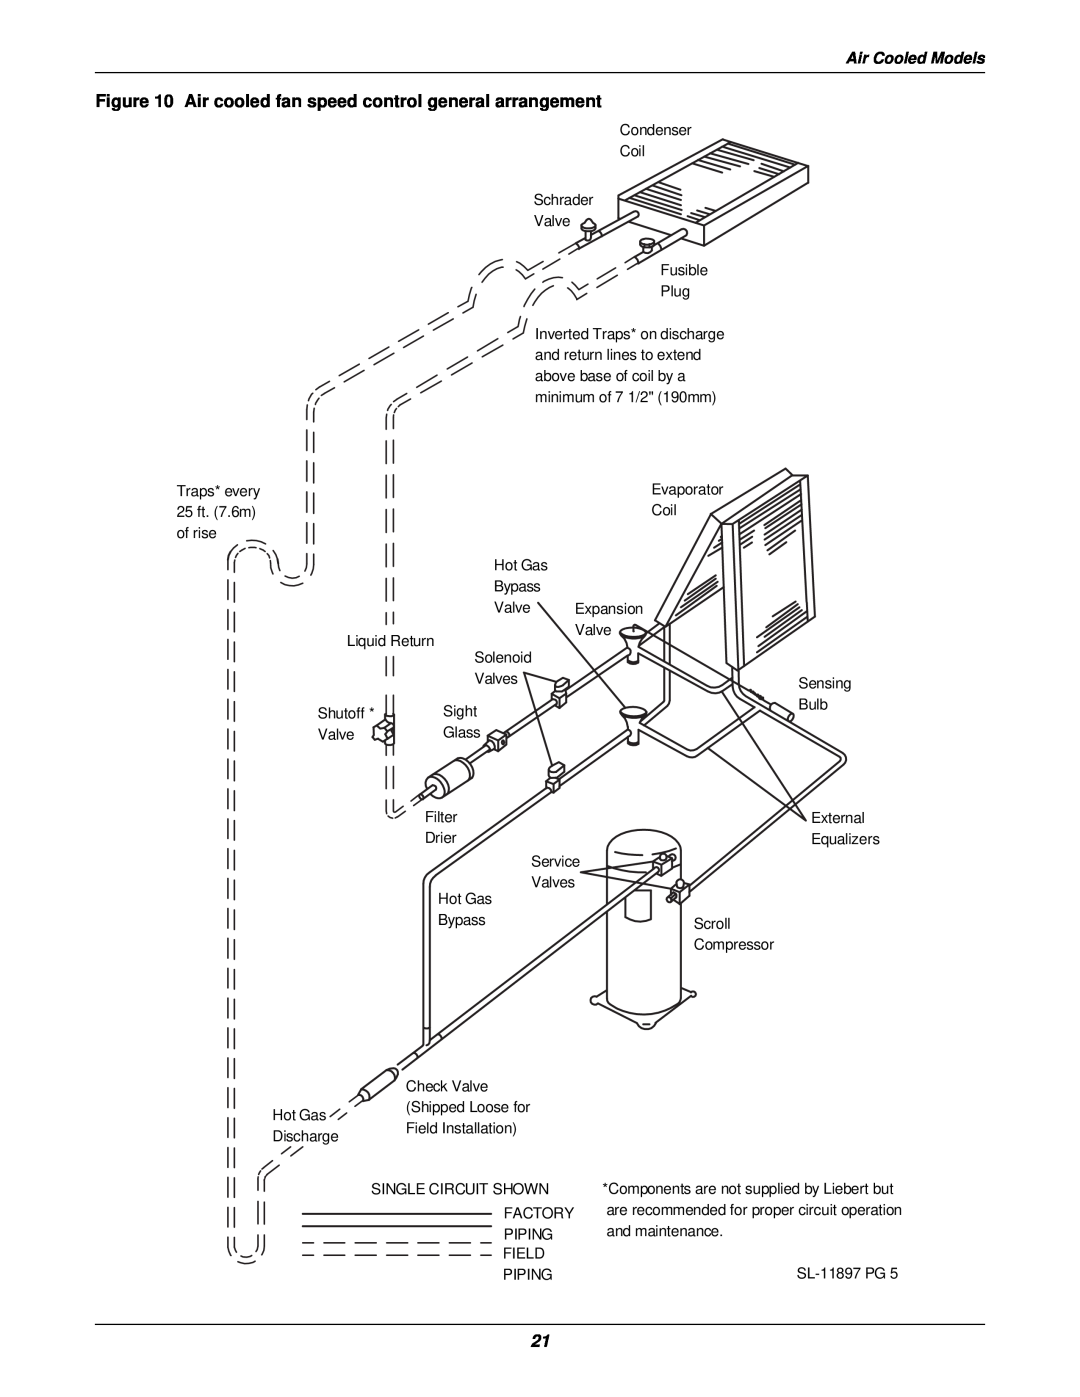 Liebert 3000 installation manual Condenser Coil Schrader Valve Fusible Plug 